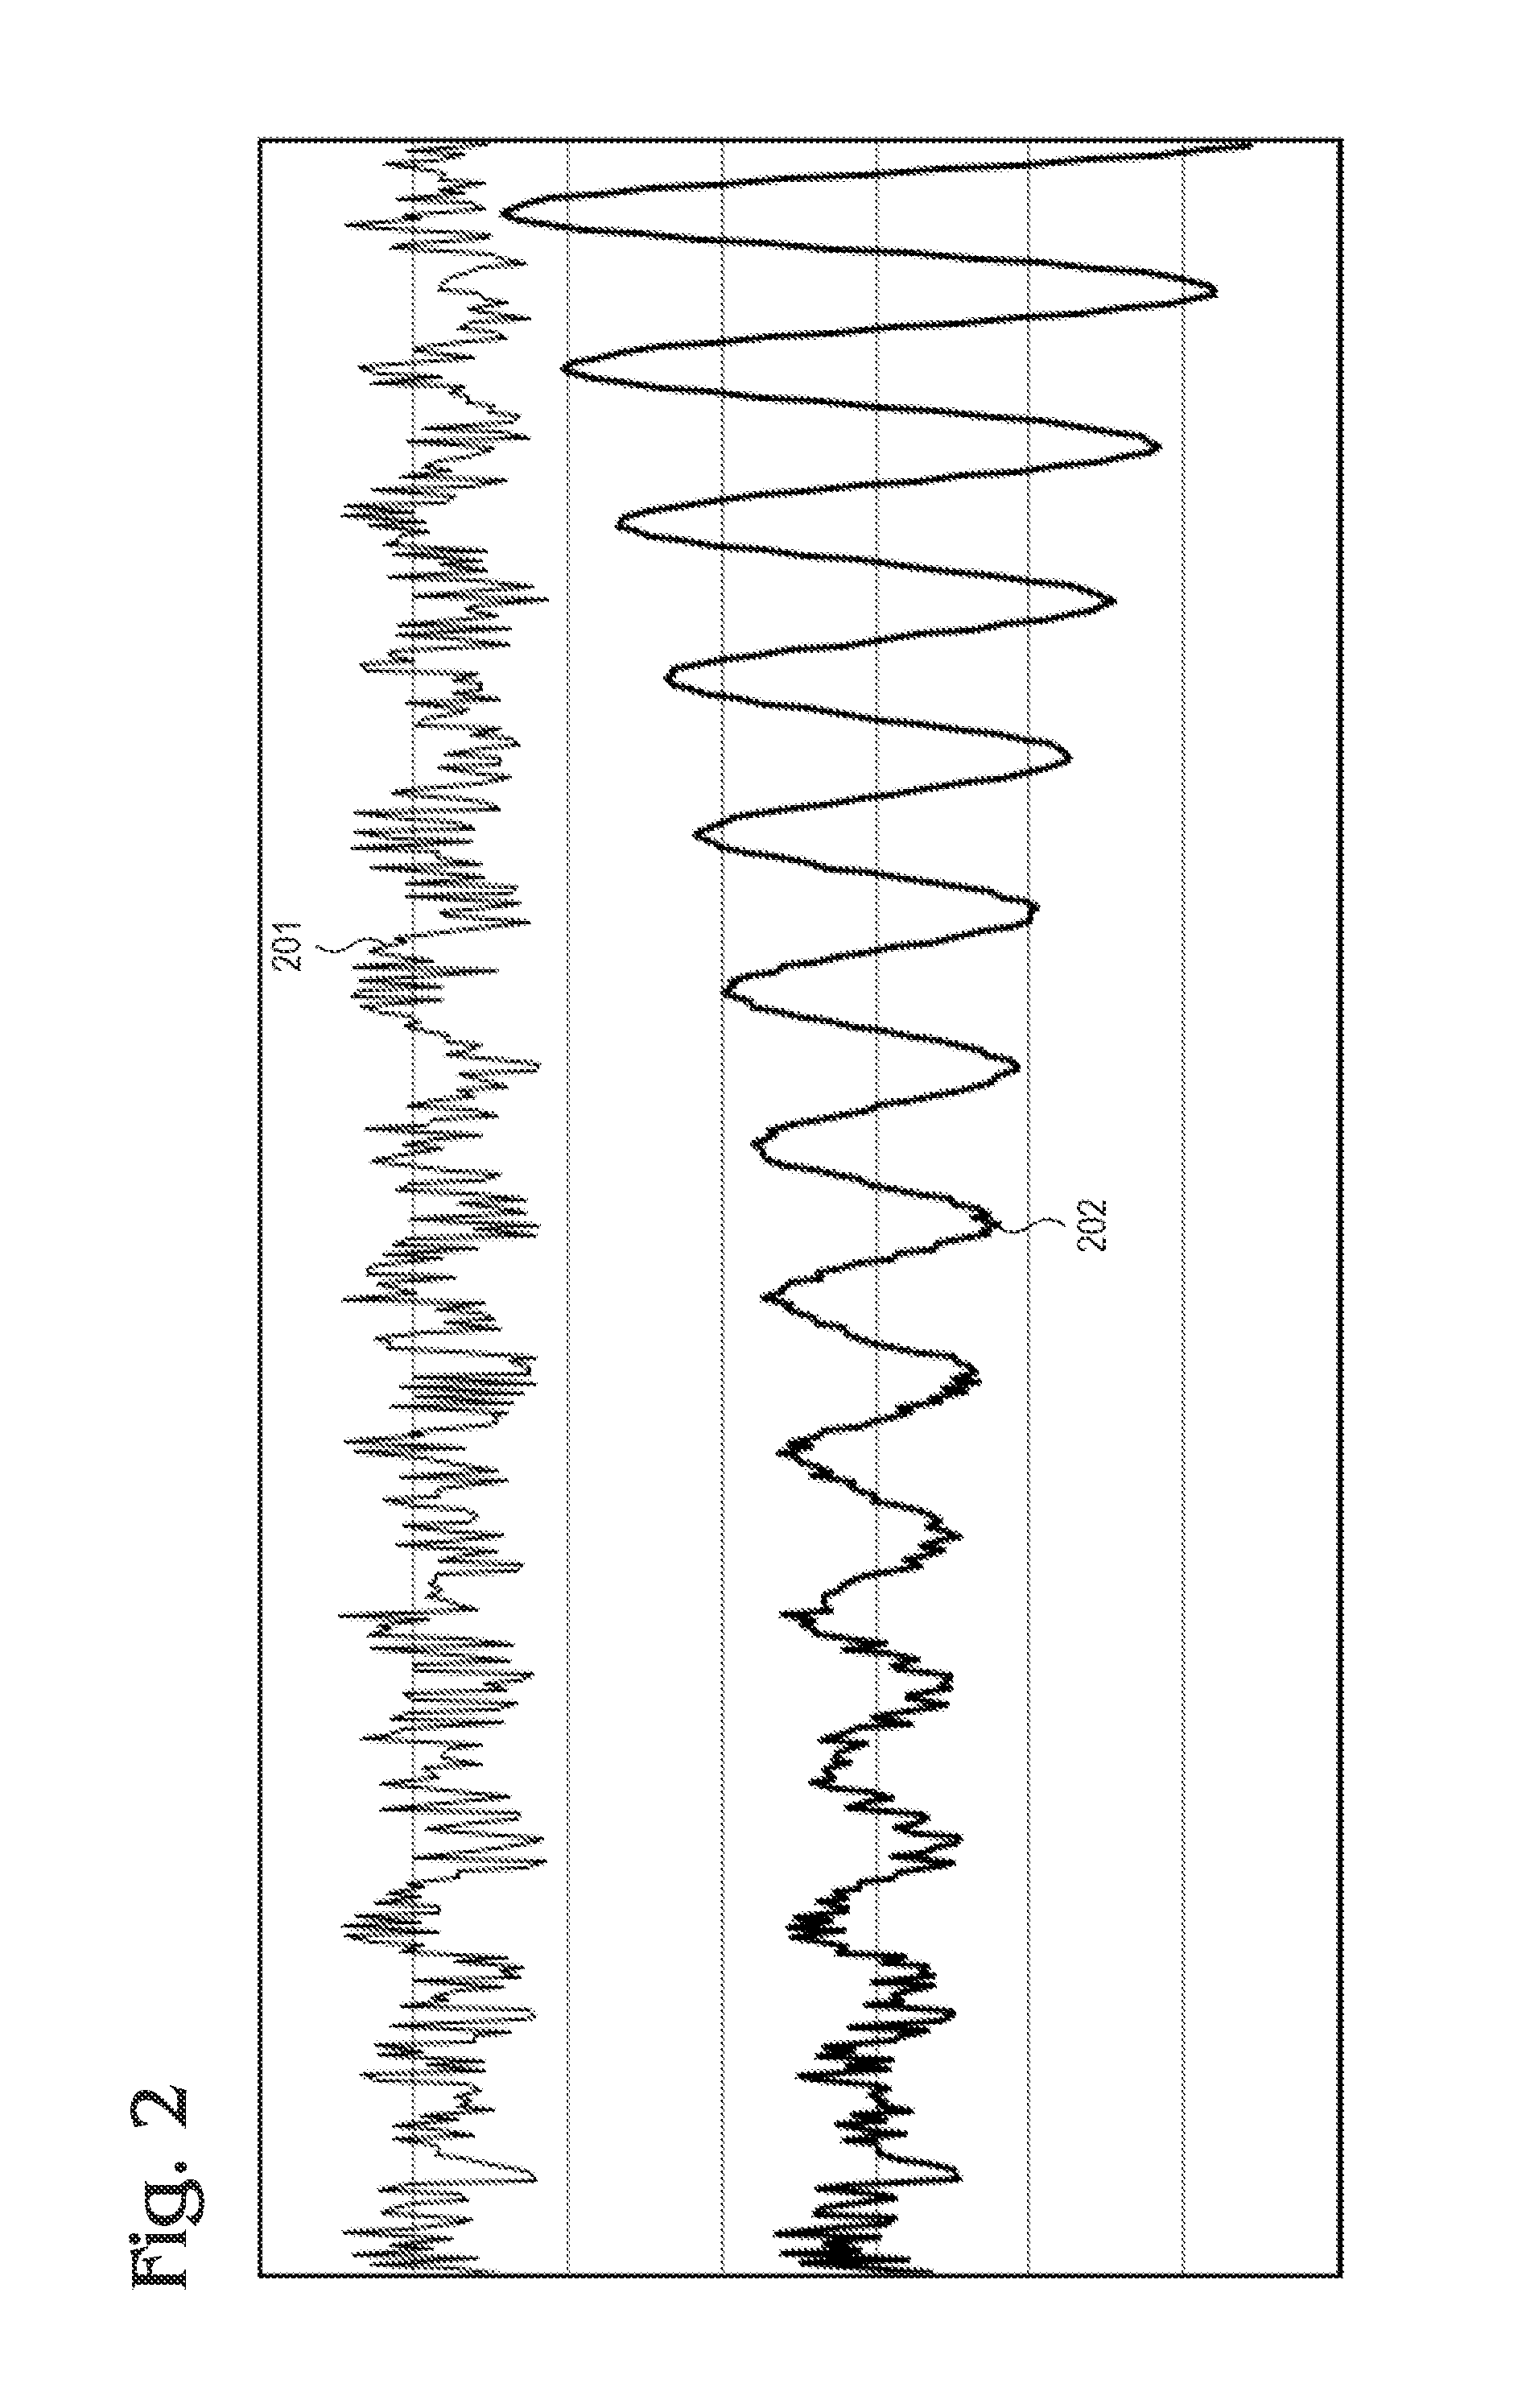 Low-power, noise insensitive communication channel using logarithmic detector amplifier (LDA) demodulator